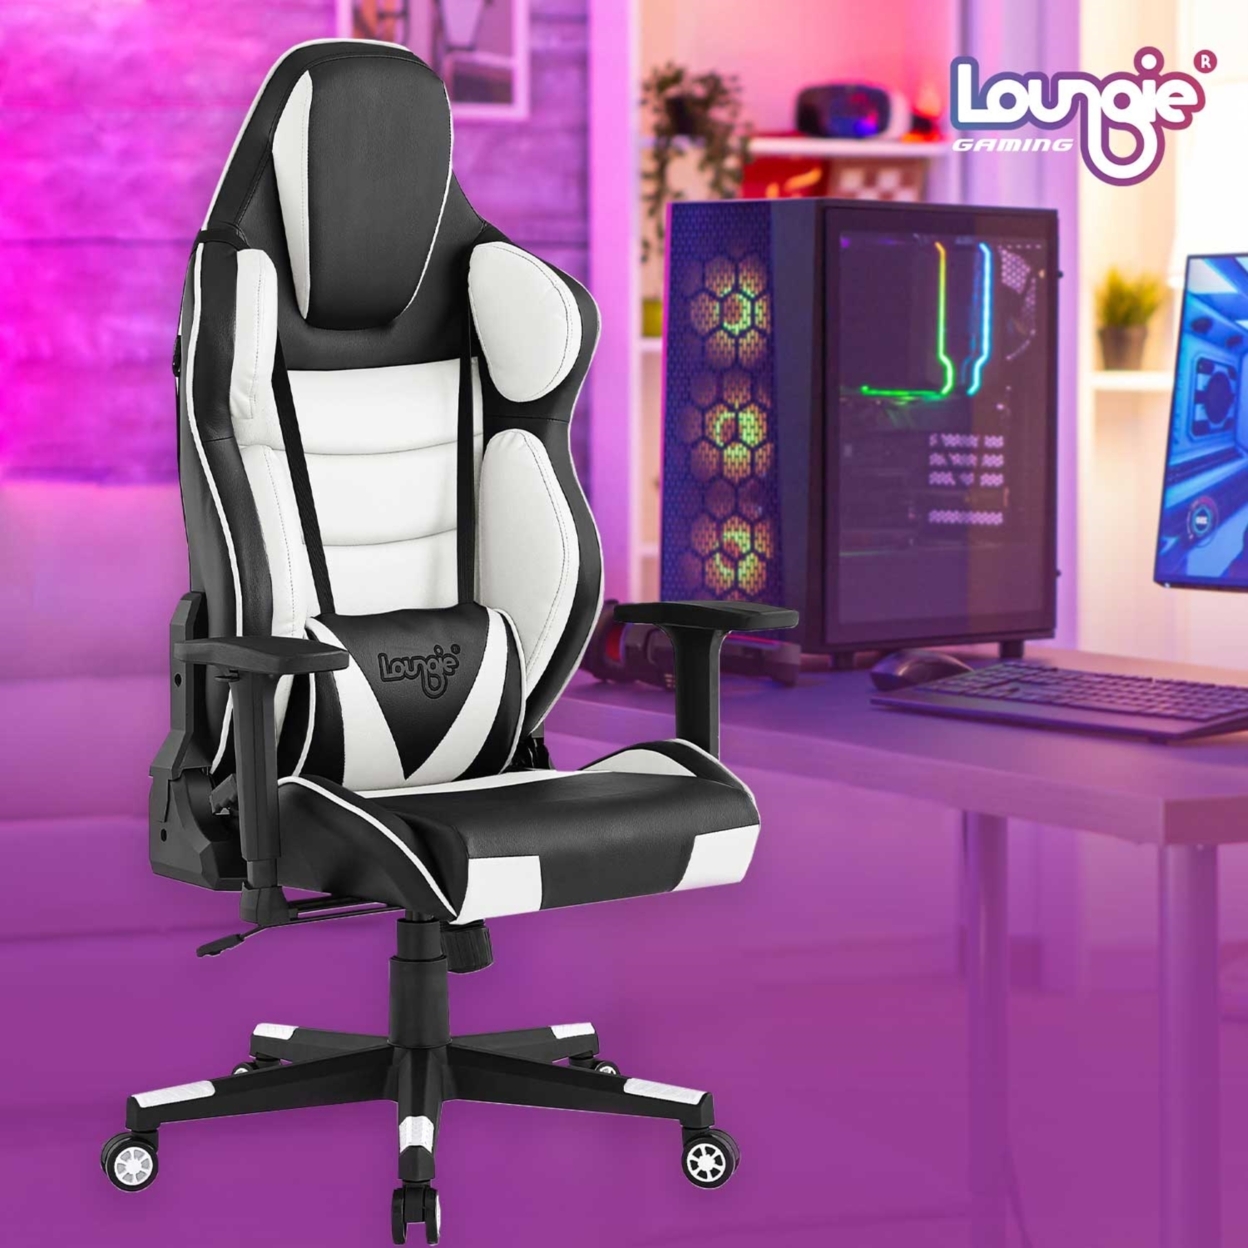 Kiya Game Chair-Swivel, Adjustable Back Angle, Seat Height And Armrest-Big Headrest, 360 Degree Rotation-Lumbar Support Cushion - Red